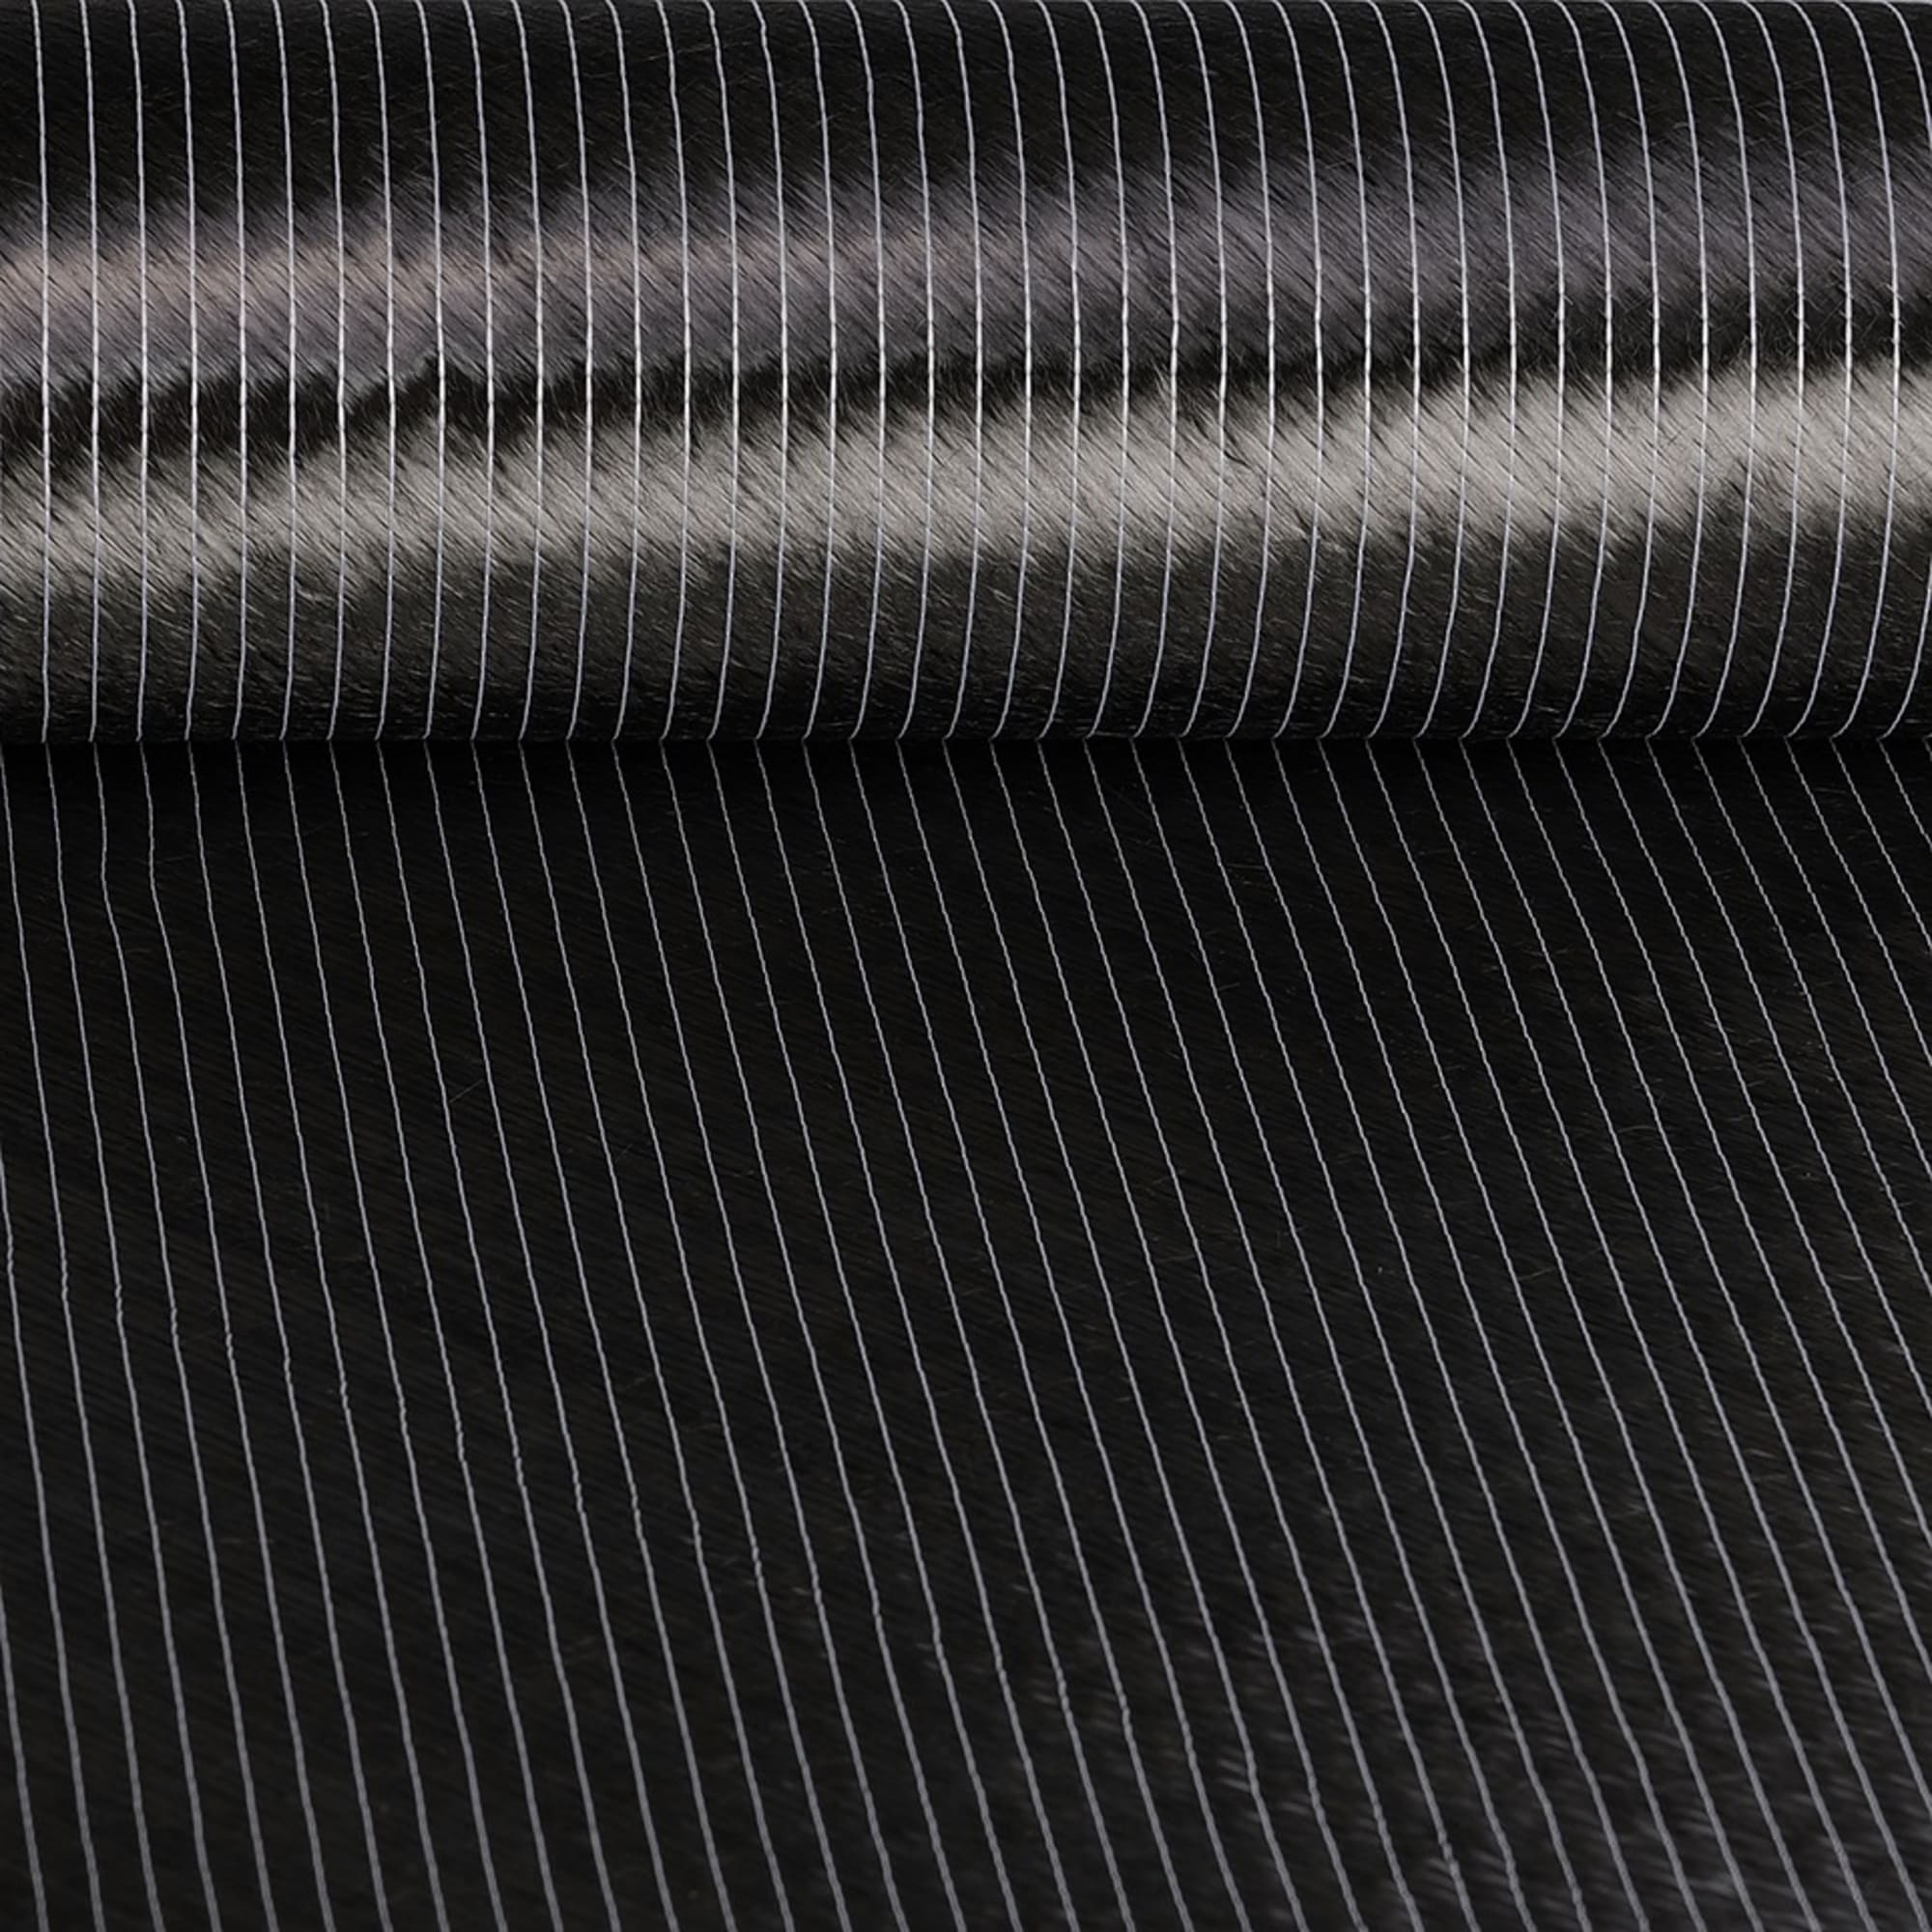 SIGRATEX® Carbon non-crimp fabric 410 g/m² (biaxial) 127 cm, image 2